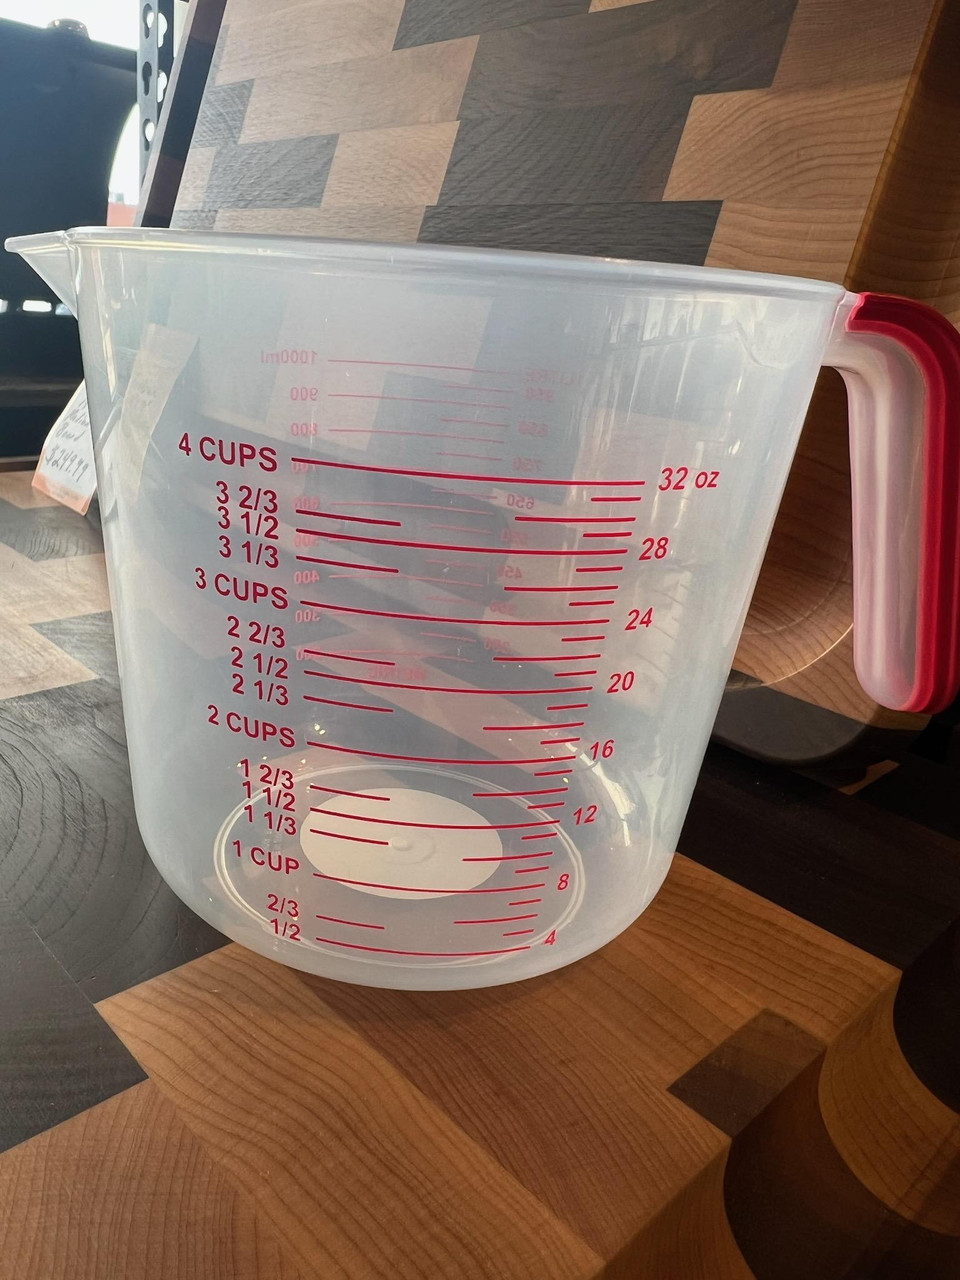 Measuring Cup - 4 Cups/32oz